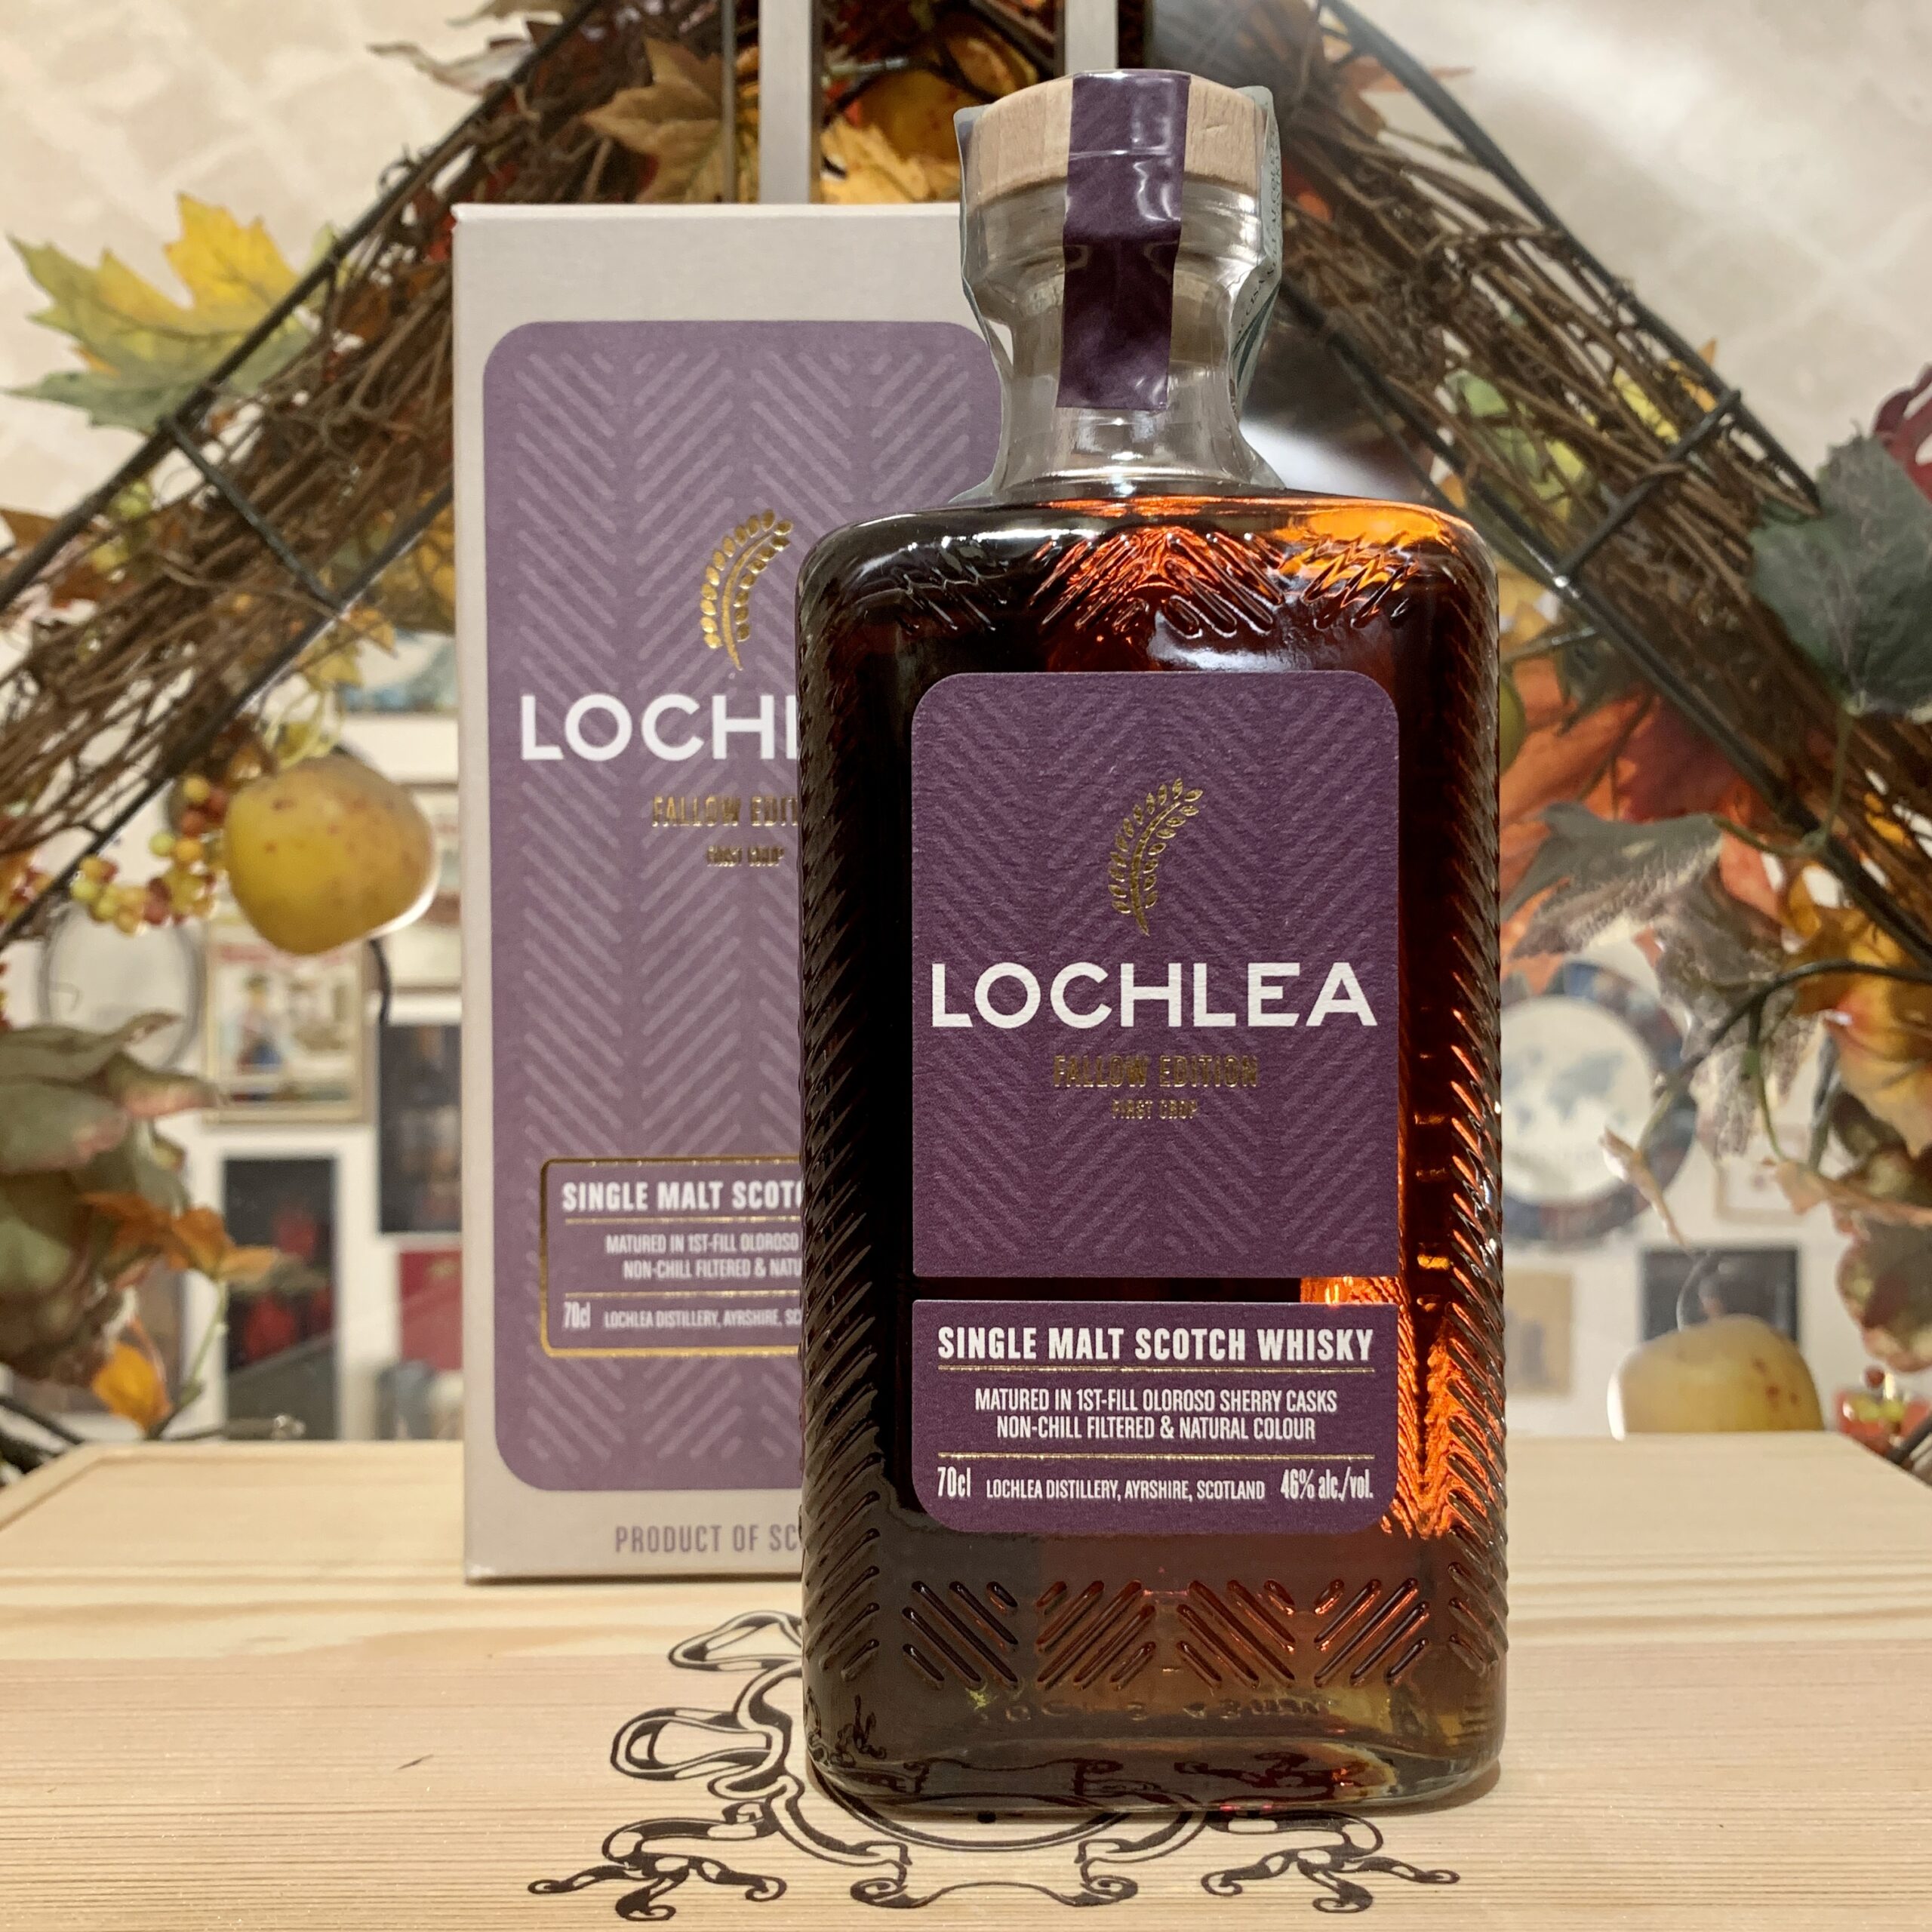 Lochlea “Fallow Editione 1st Crop” Lowlands Single Malt Scotch Whisky